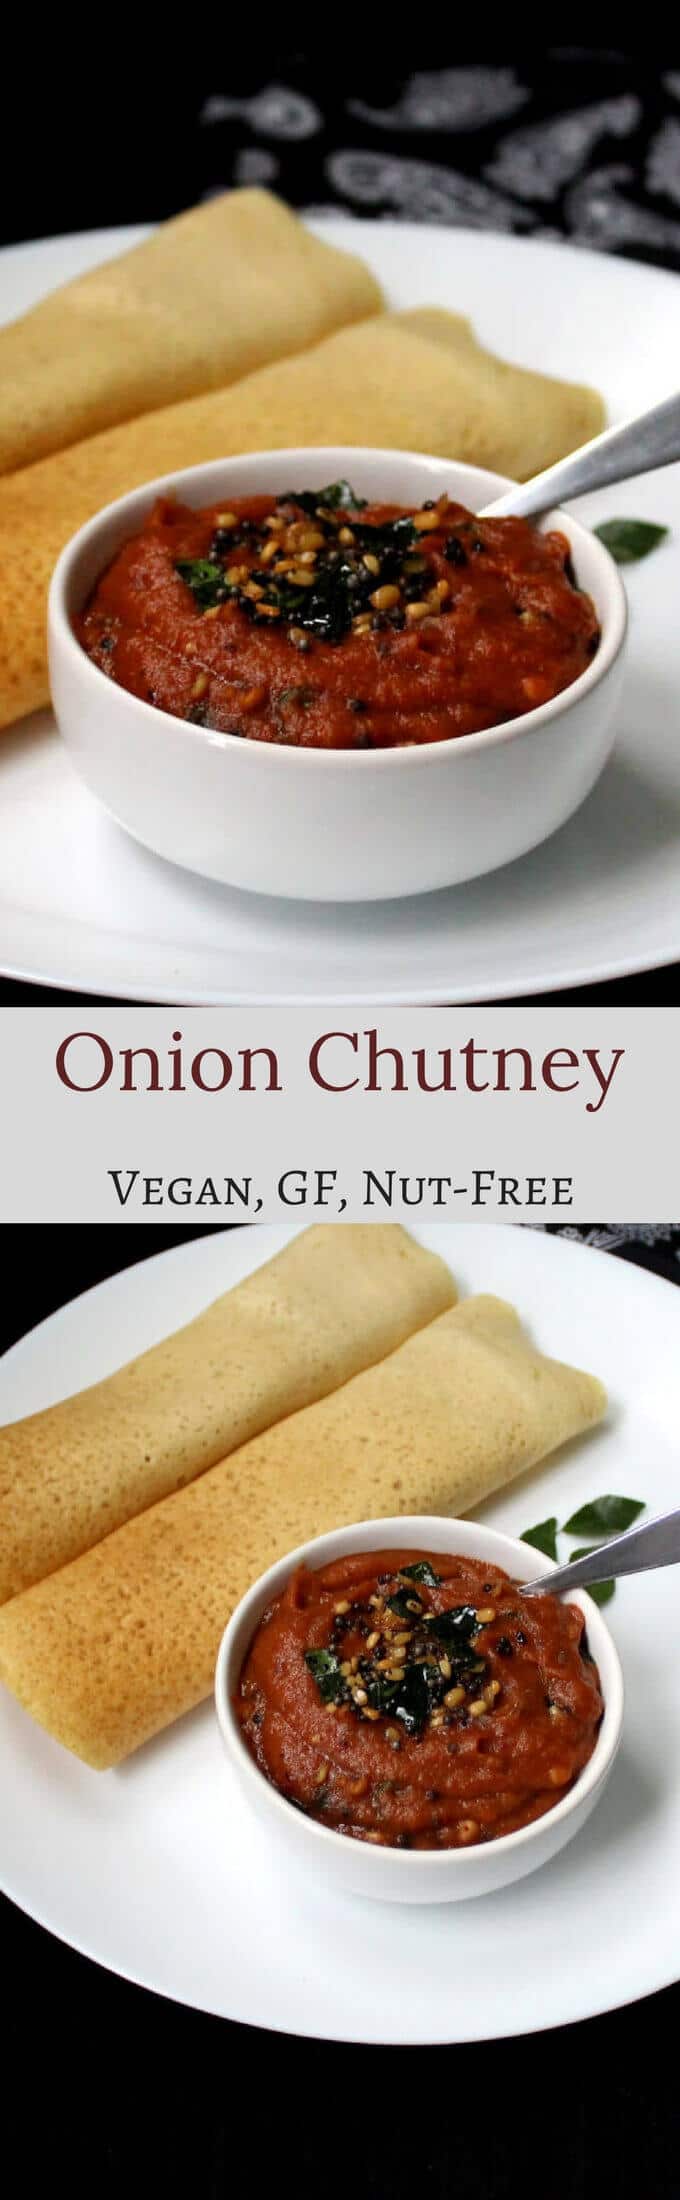 Onion Chutney - HolyCowVegan.net